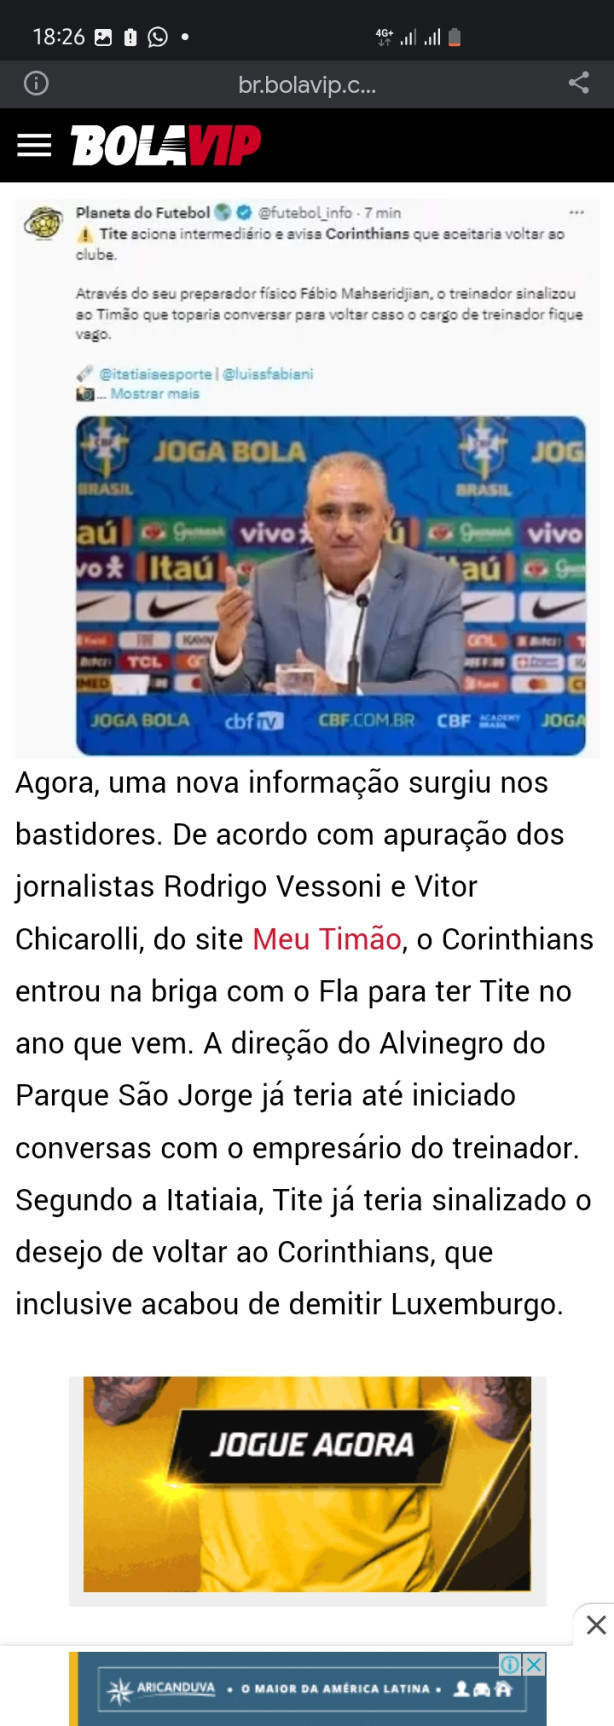 Segundo jornalista Rodrigo vessoni e Vitor chacarolli Tite?